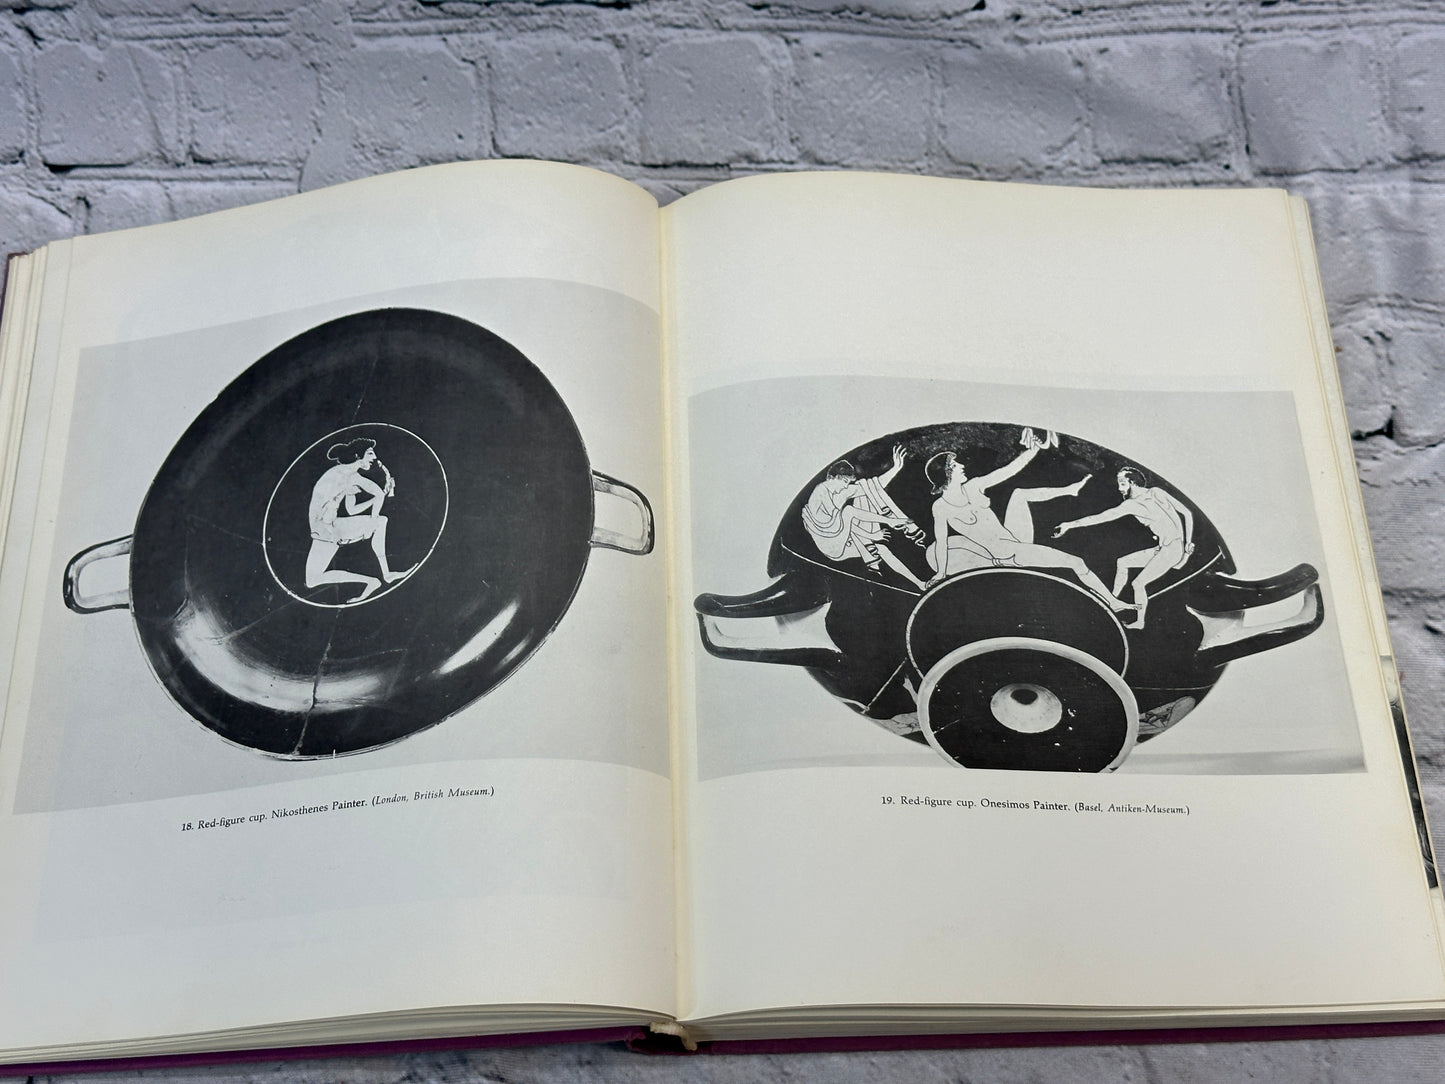 Studies In Erotic Art by Theodore Bowie, et. al [1970]